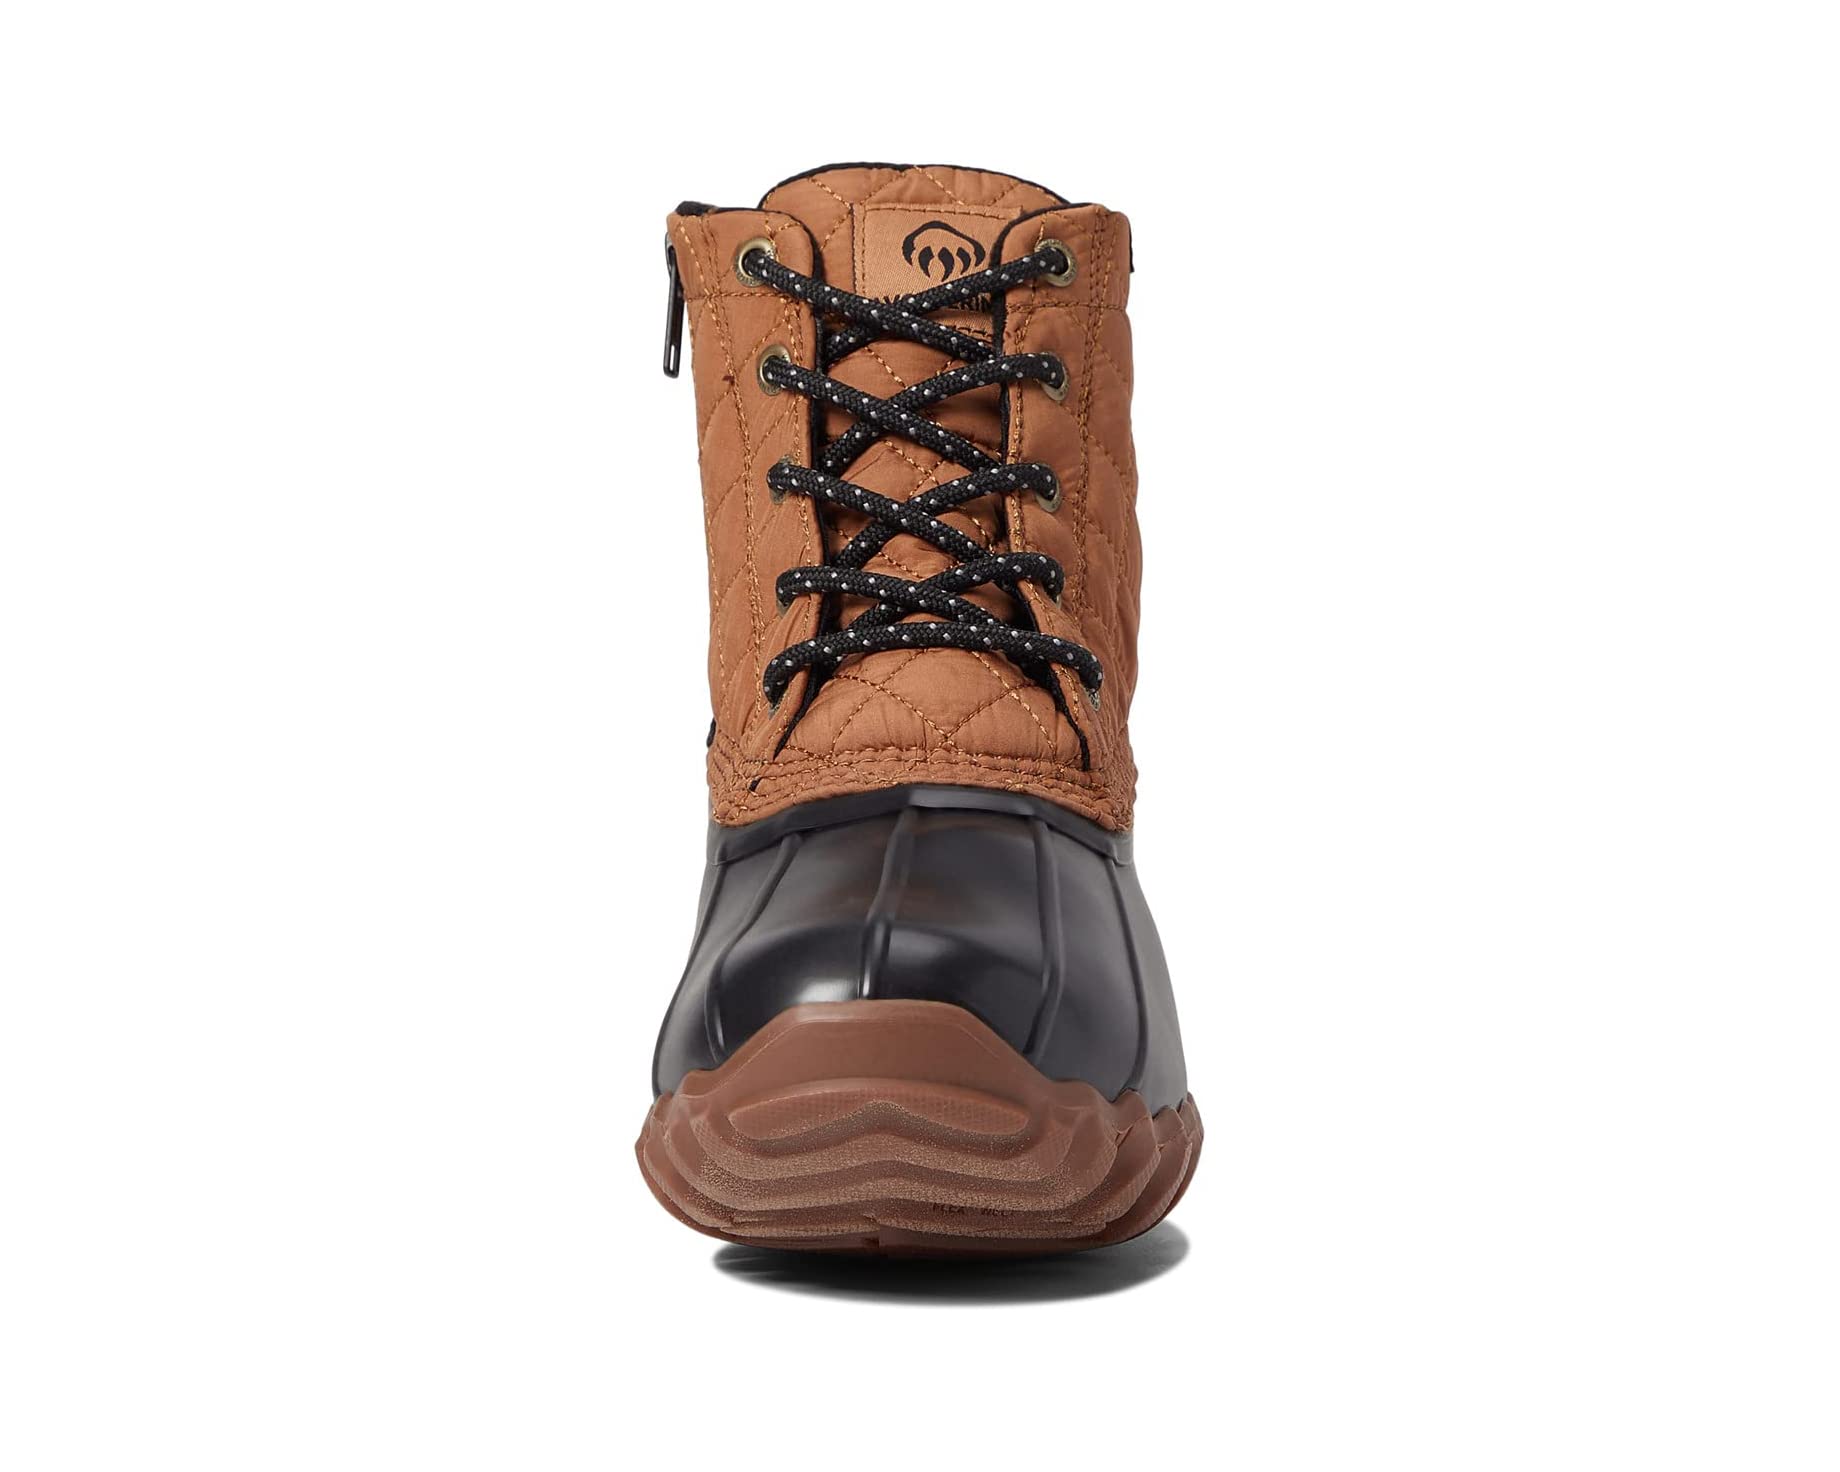 Ботинки Torrent Quilted Wolverine Heritage, коричневый ботинки zara kids combined quilted коричневый